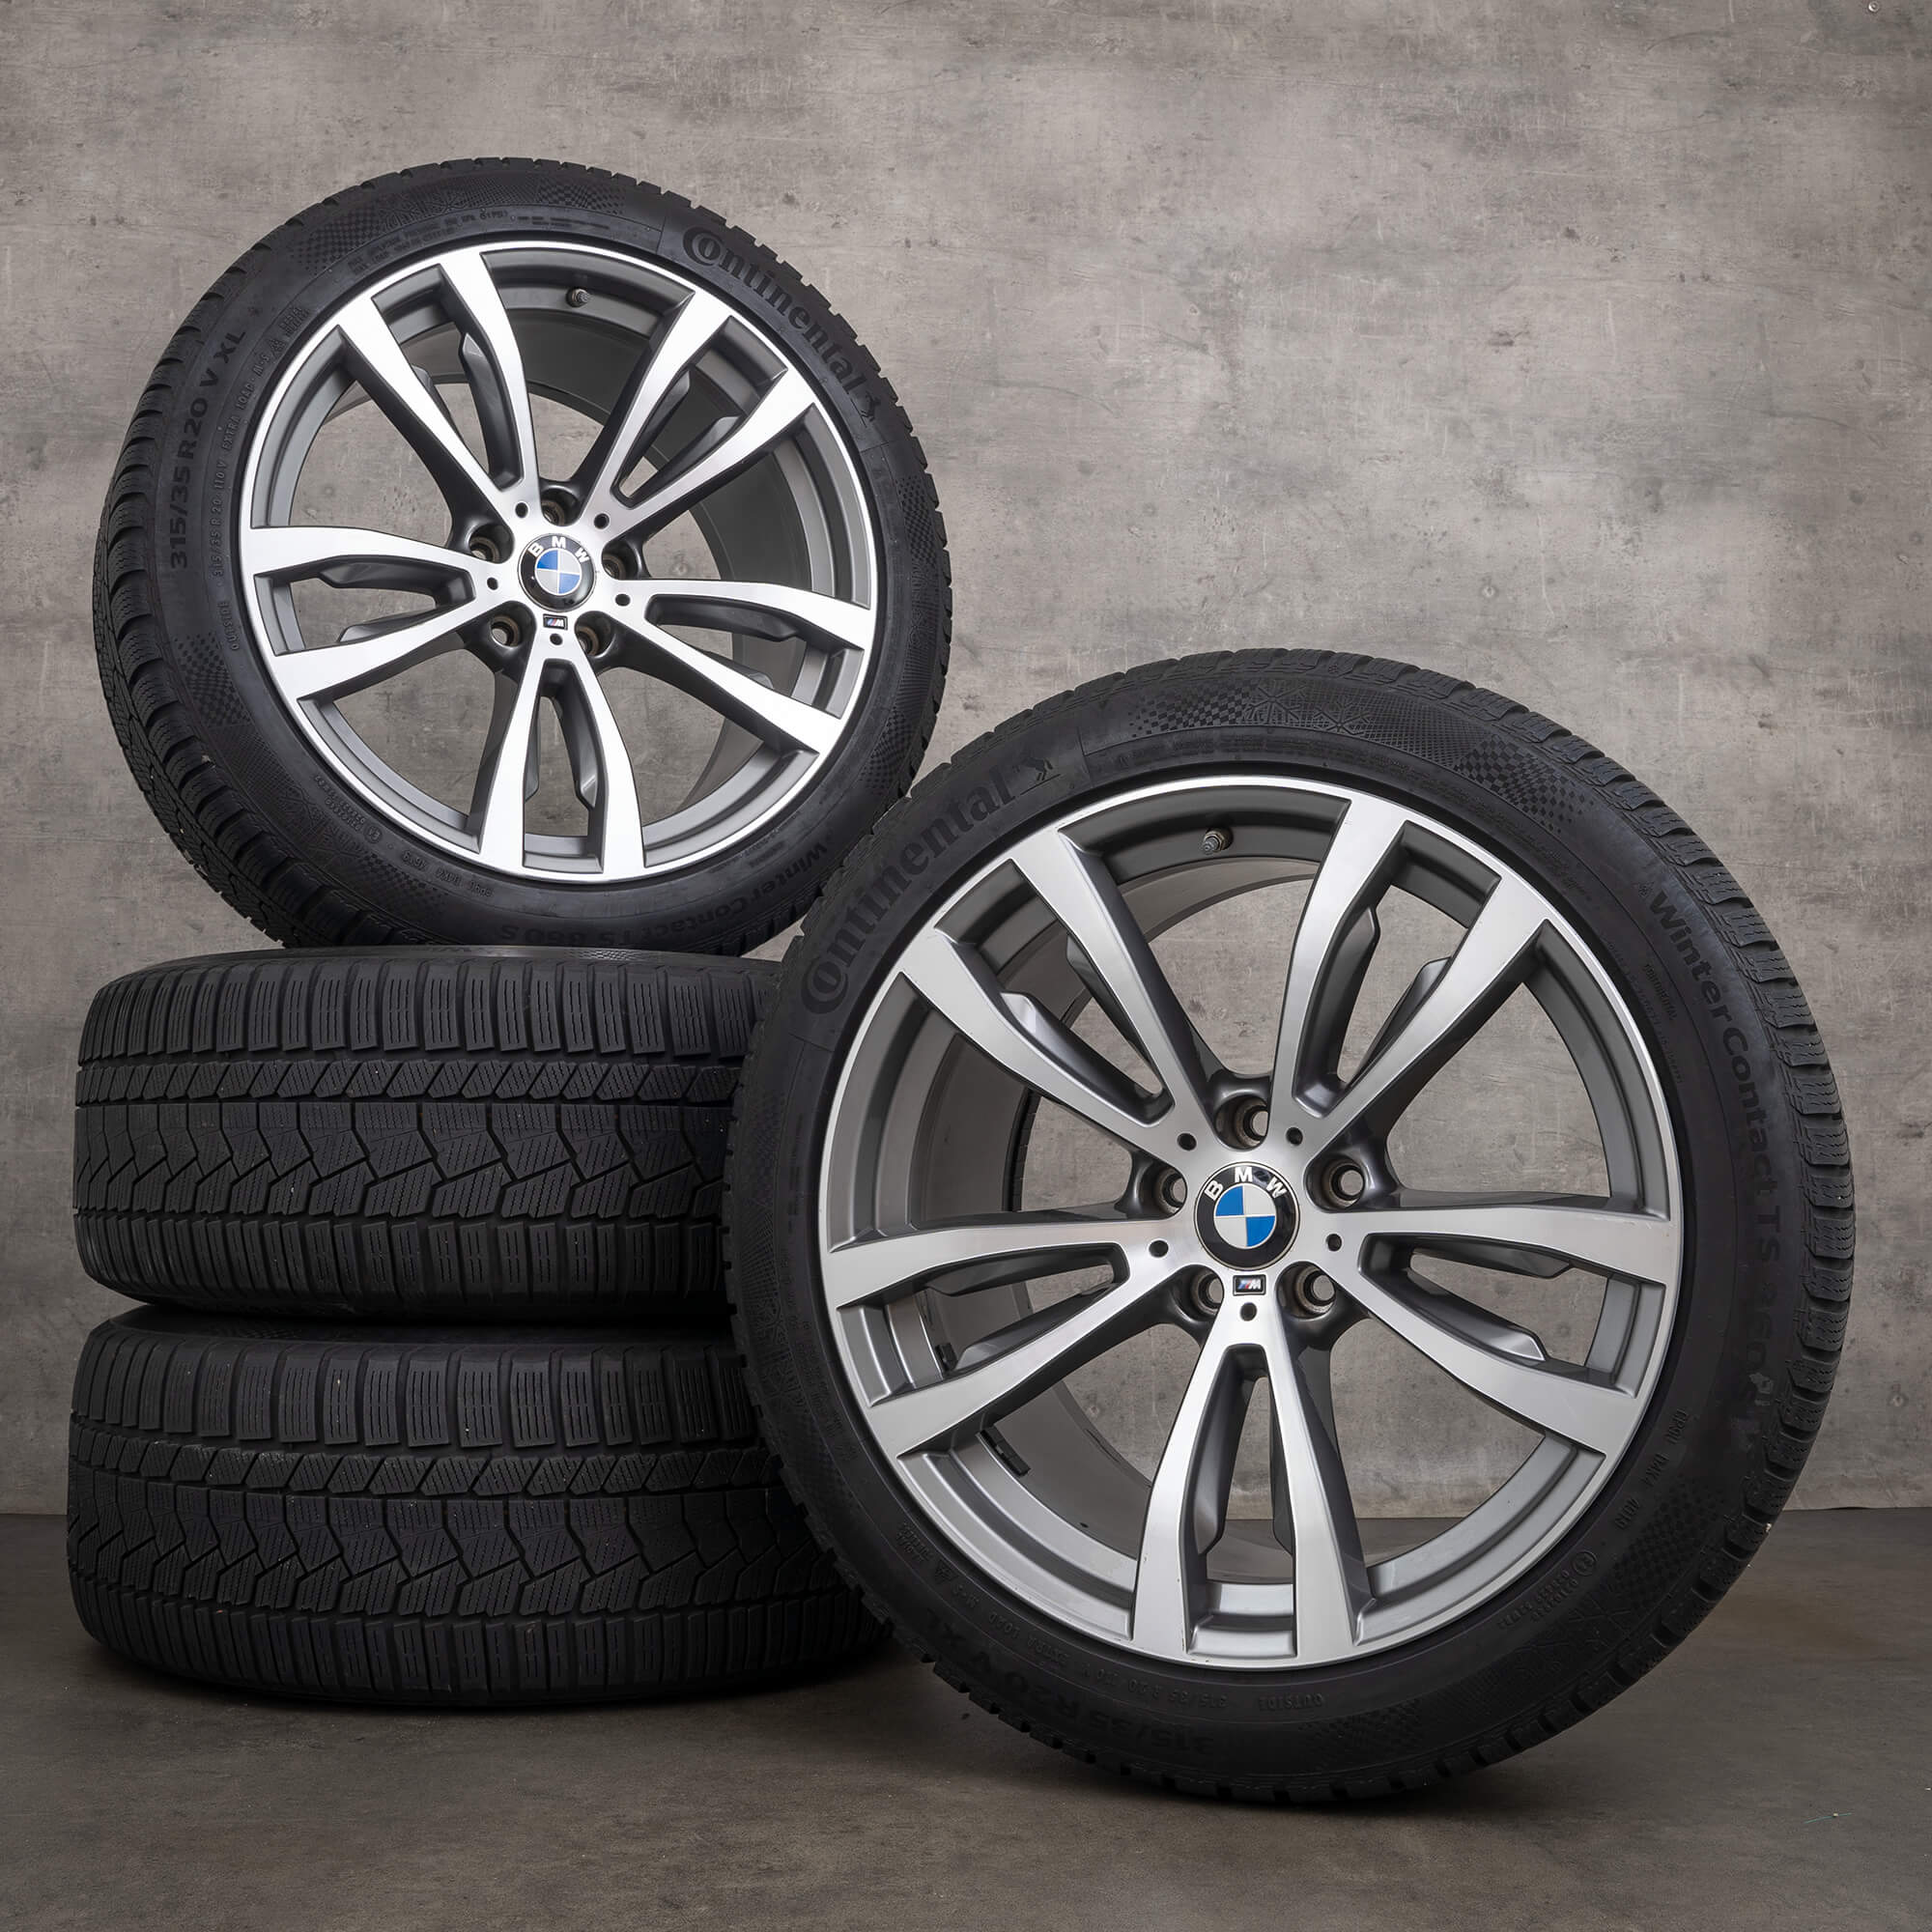 BMW X5 E70 F15 X6 F16 winter wheels 20 inch rims styling 469 M tires